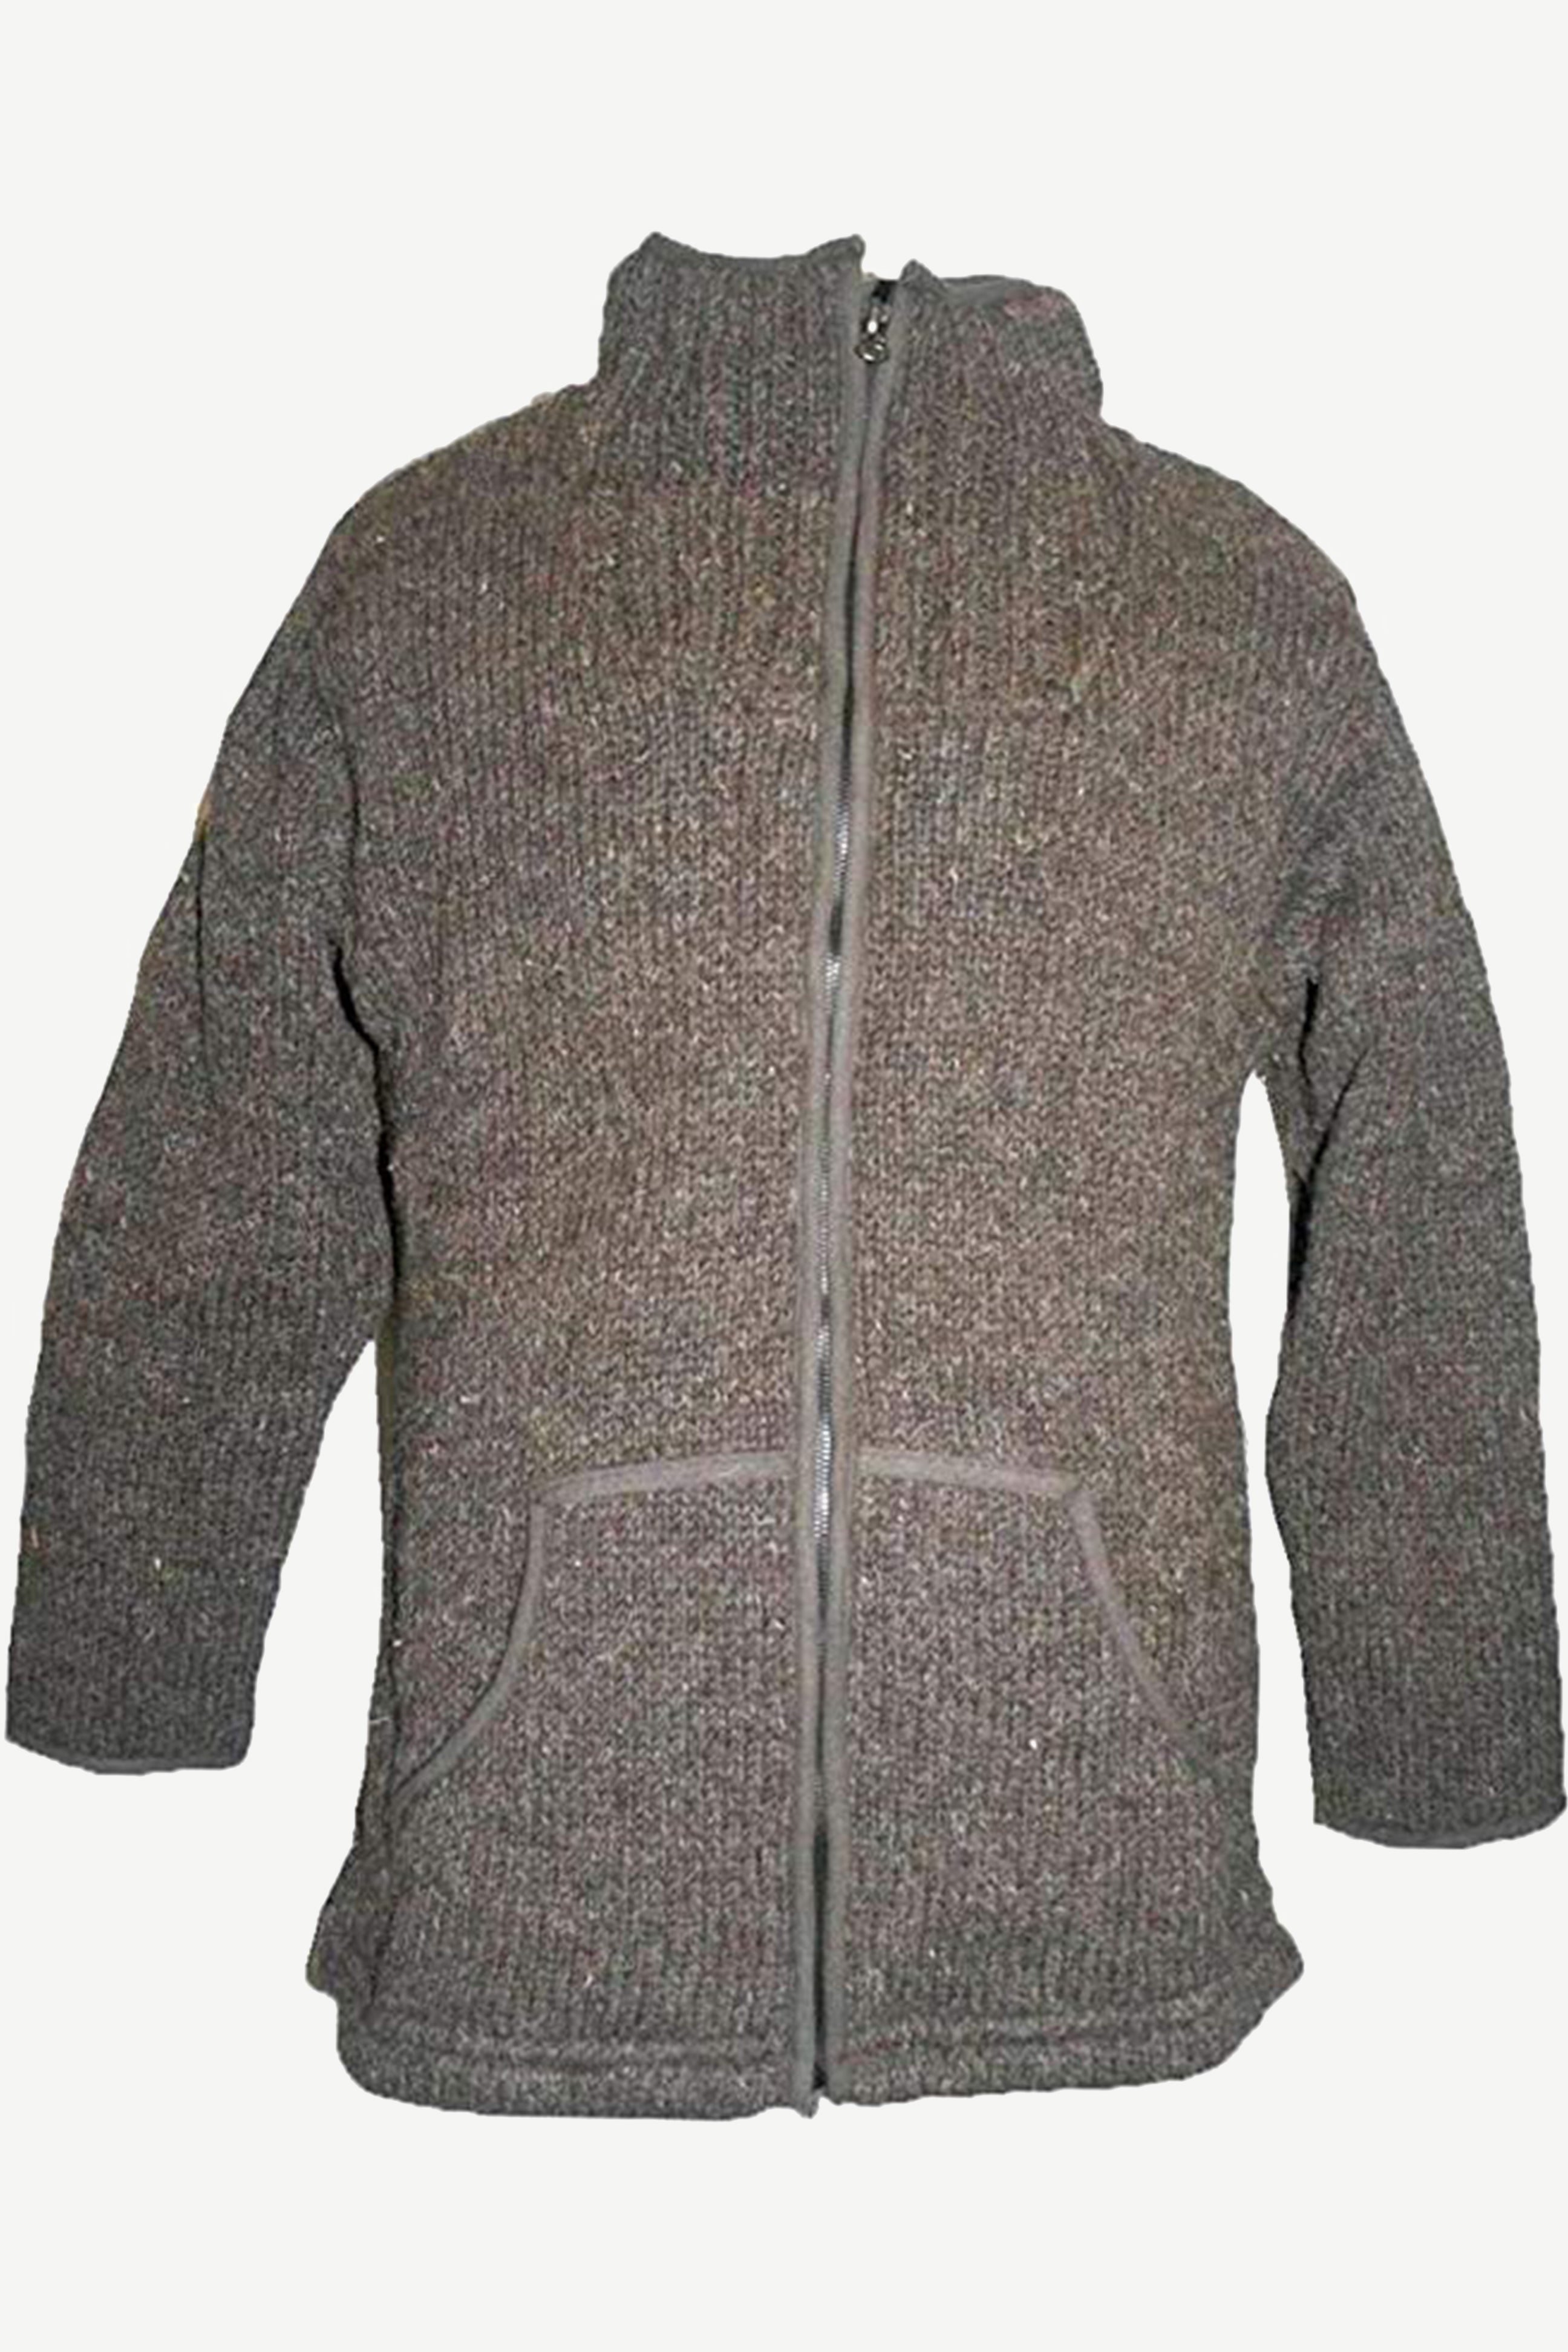 wool lined jacket mens